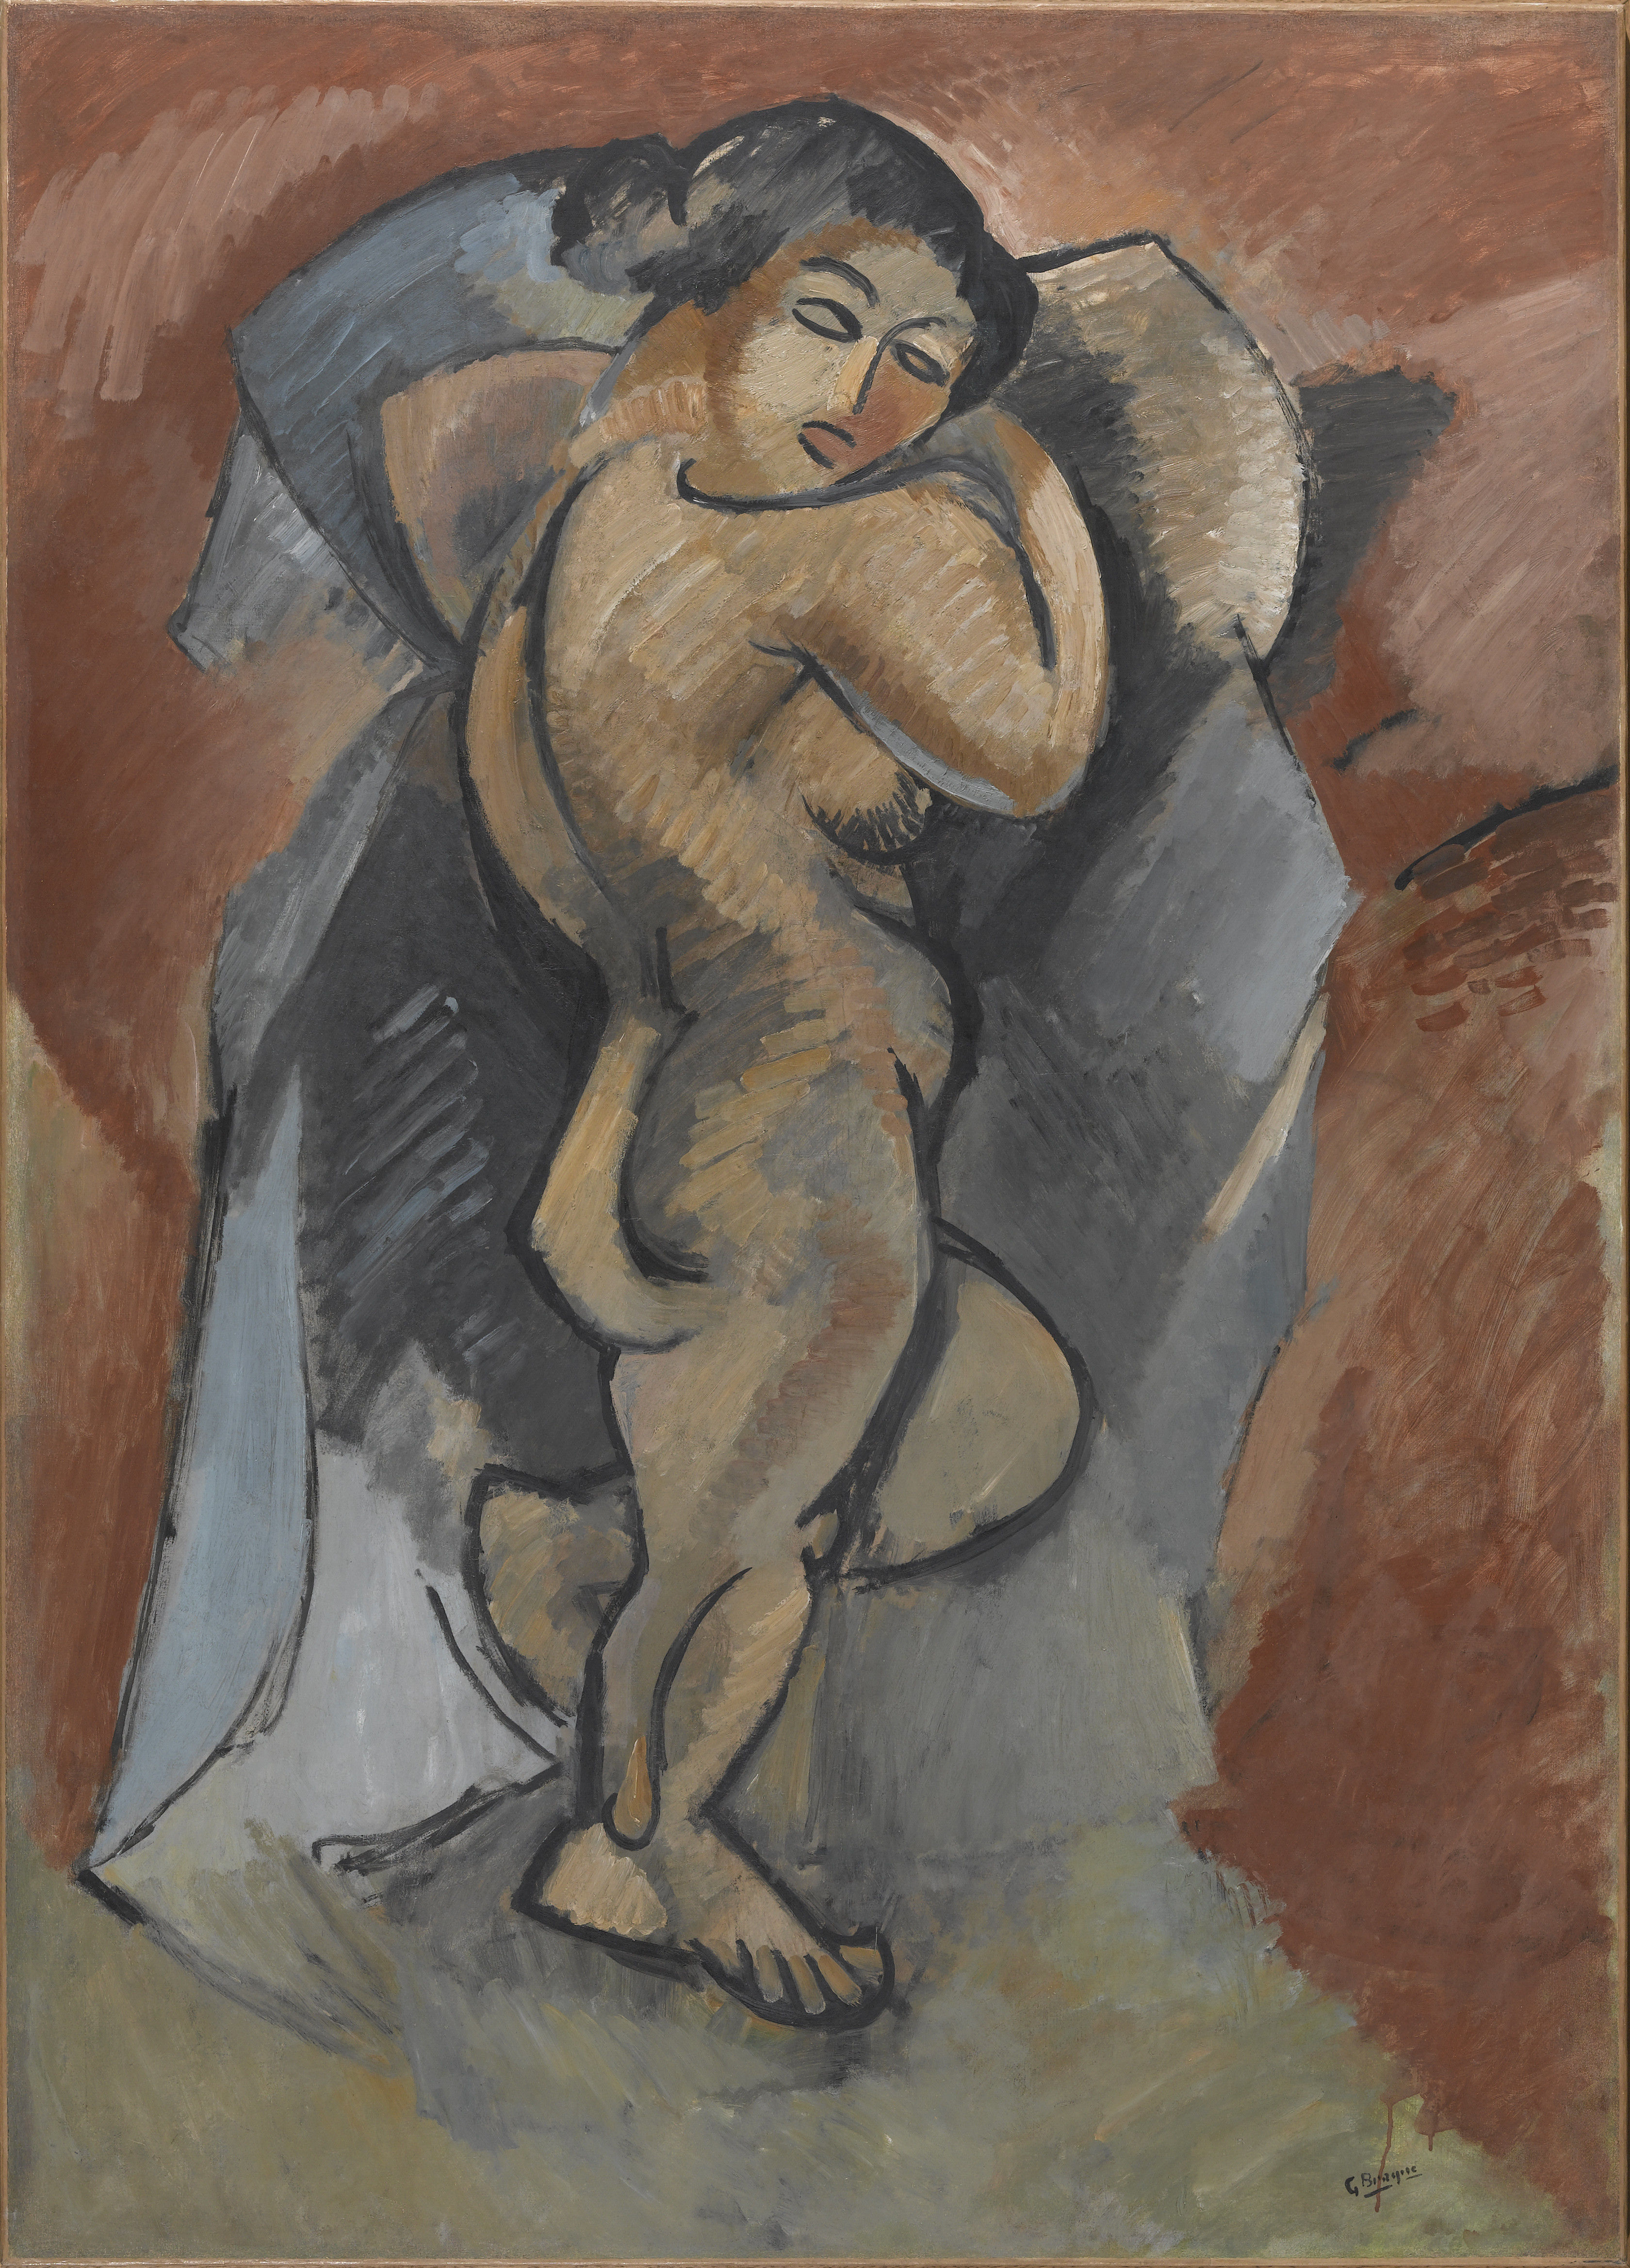 Ejemplo de cubismo geométrico, Georges Braque Grand Nu, 1907-1908